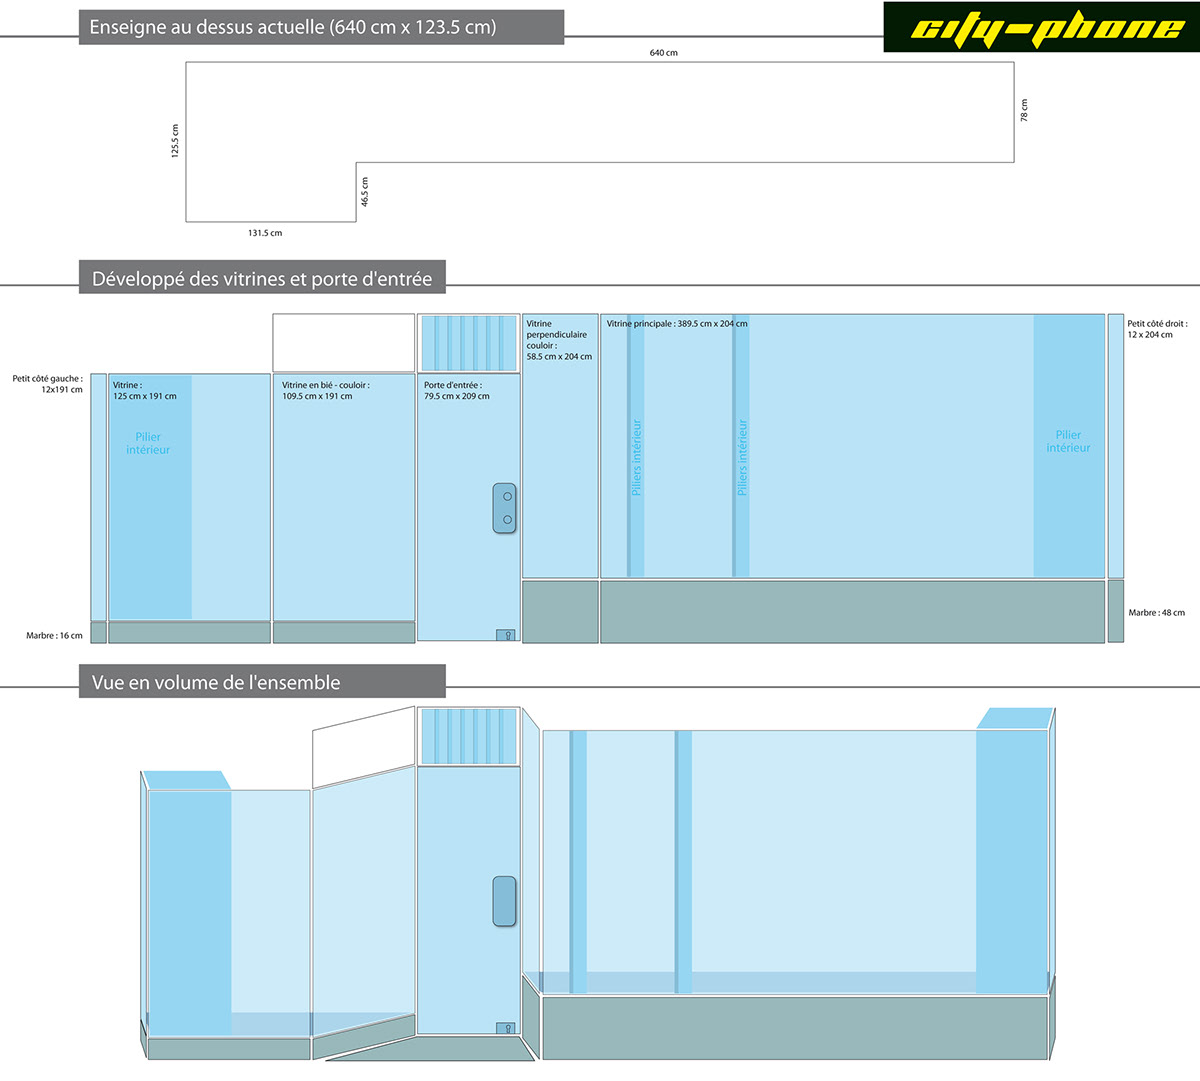 Infographie - Graphic designer Paper Printing